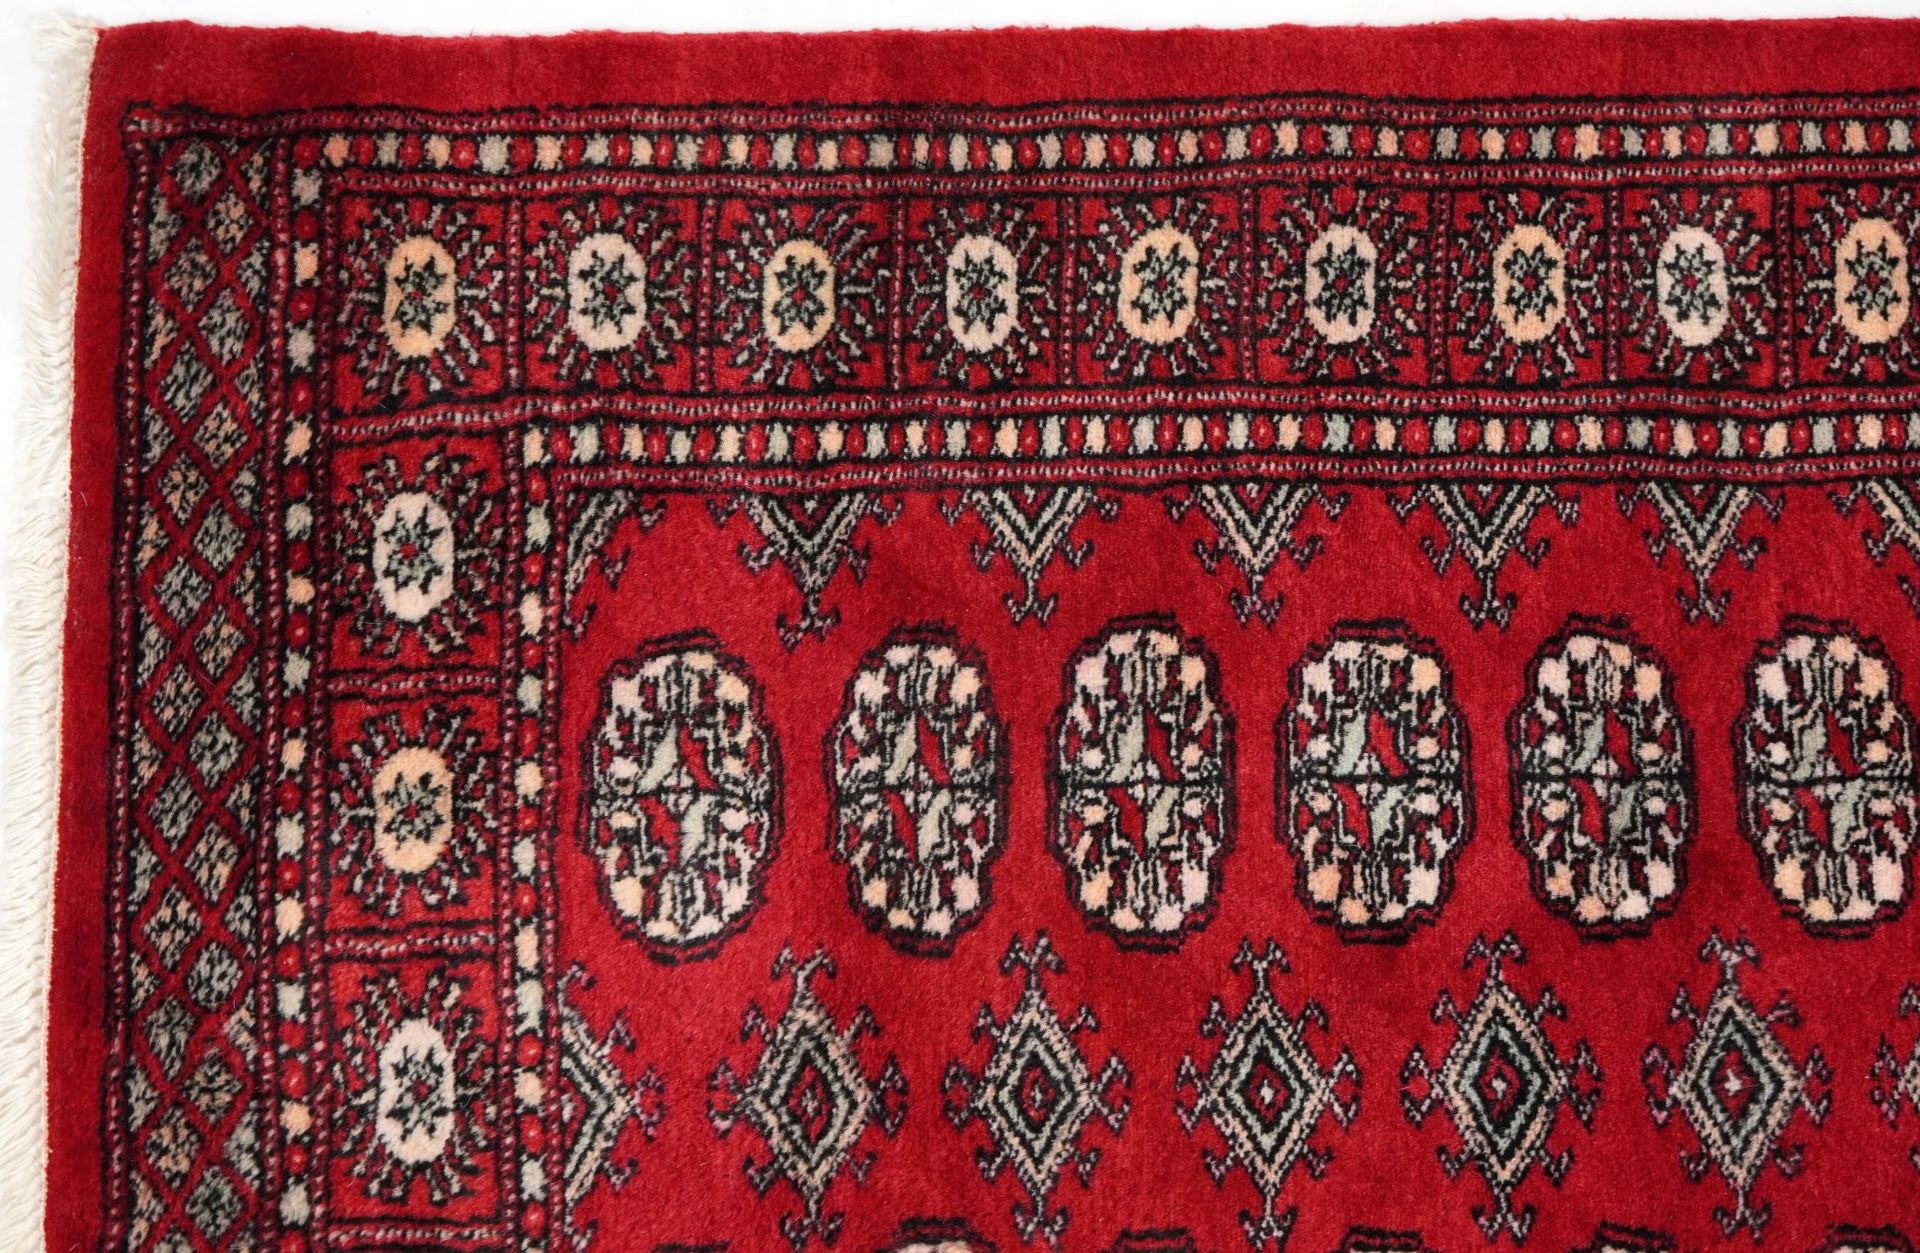 Rectangular Bokhara red ground rug having an all over geometric design, 154cm x 96cm - Image 2 of 6